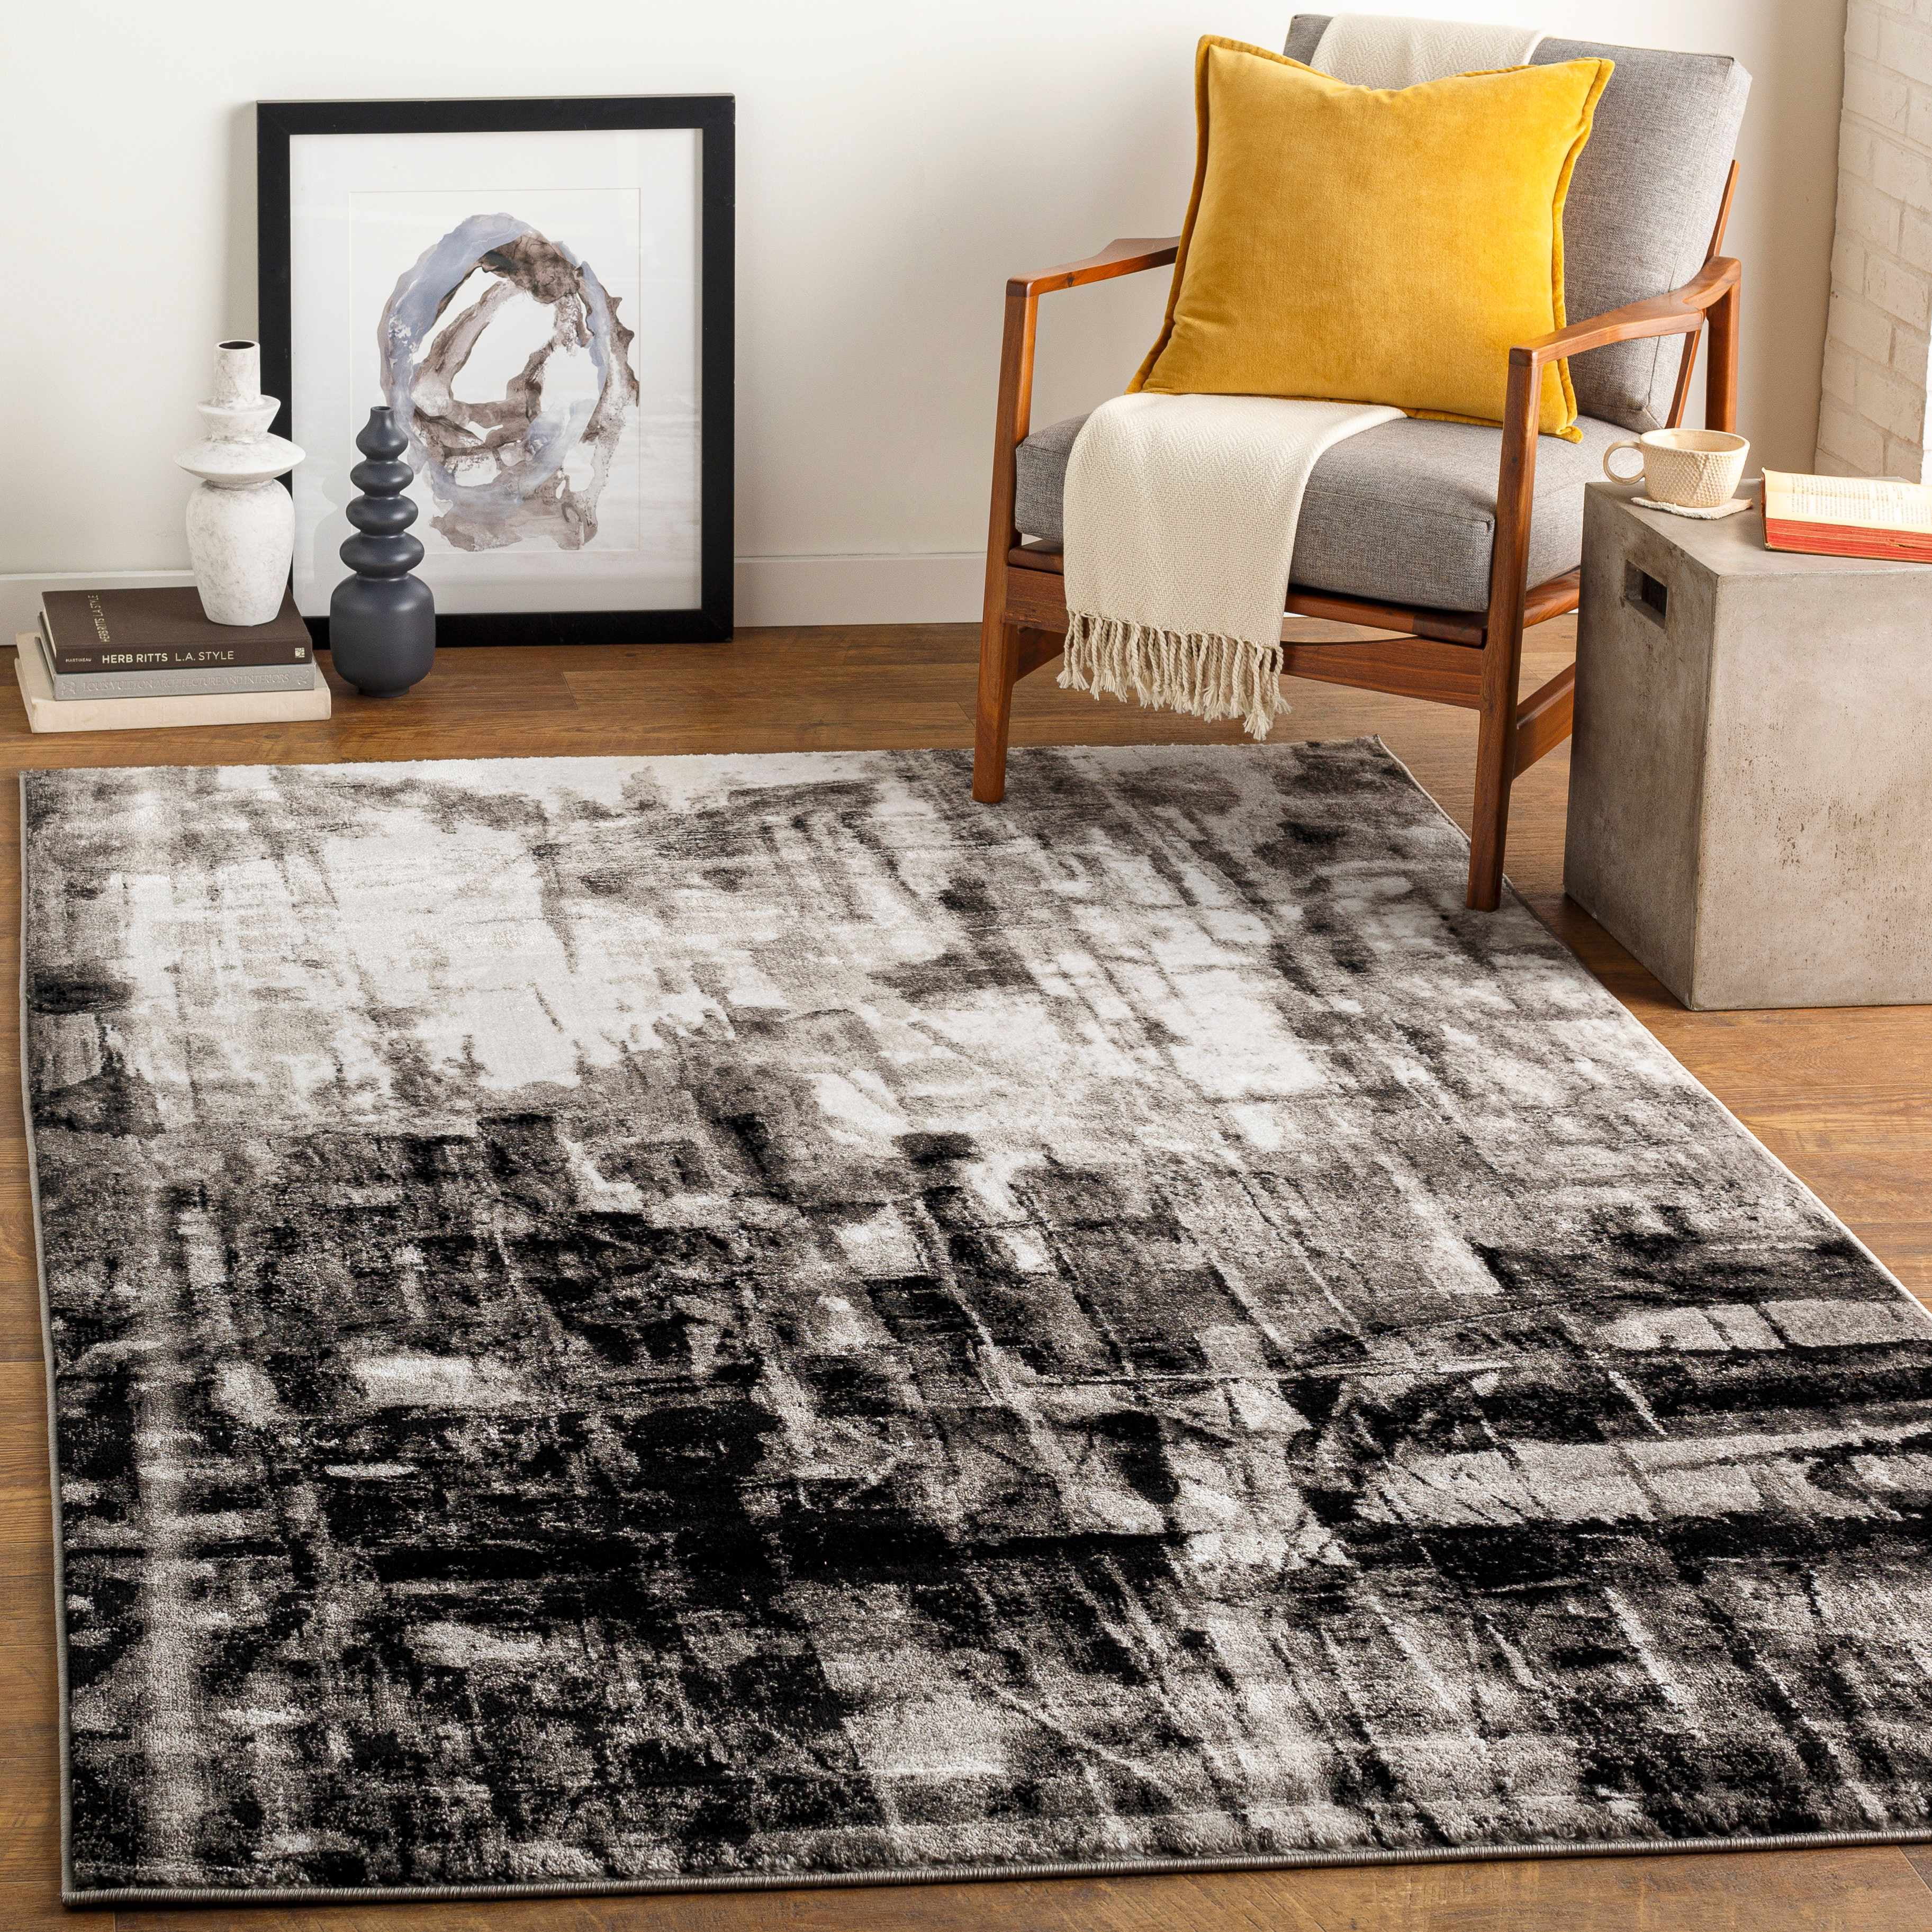 Hauteloom Westpoint Living Room, Bedroom Area Rug - Contemporary -  Black,Charcoal,Medium Gray - 7'10 x 10'6 